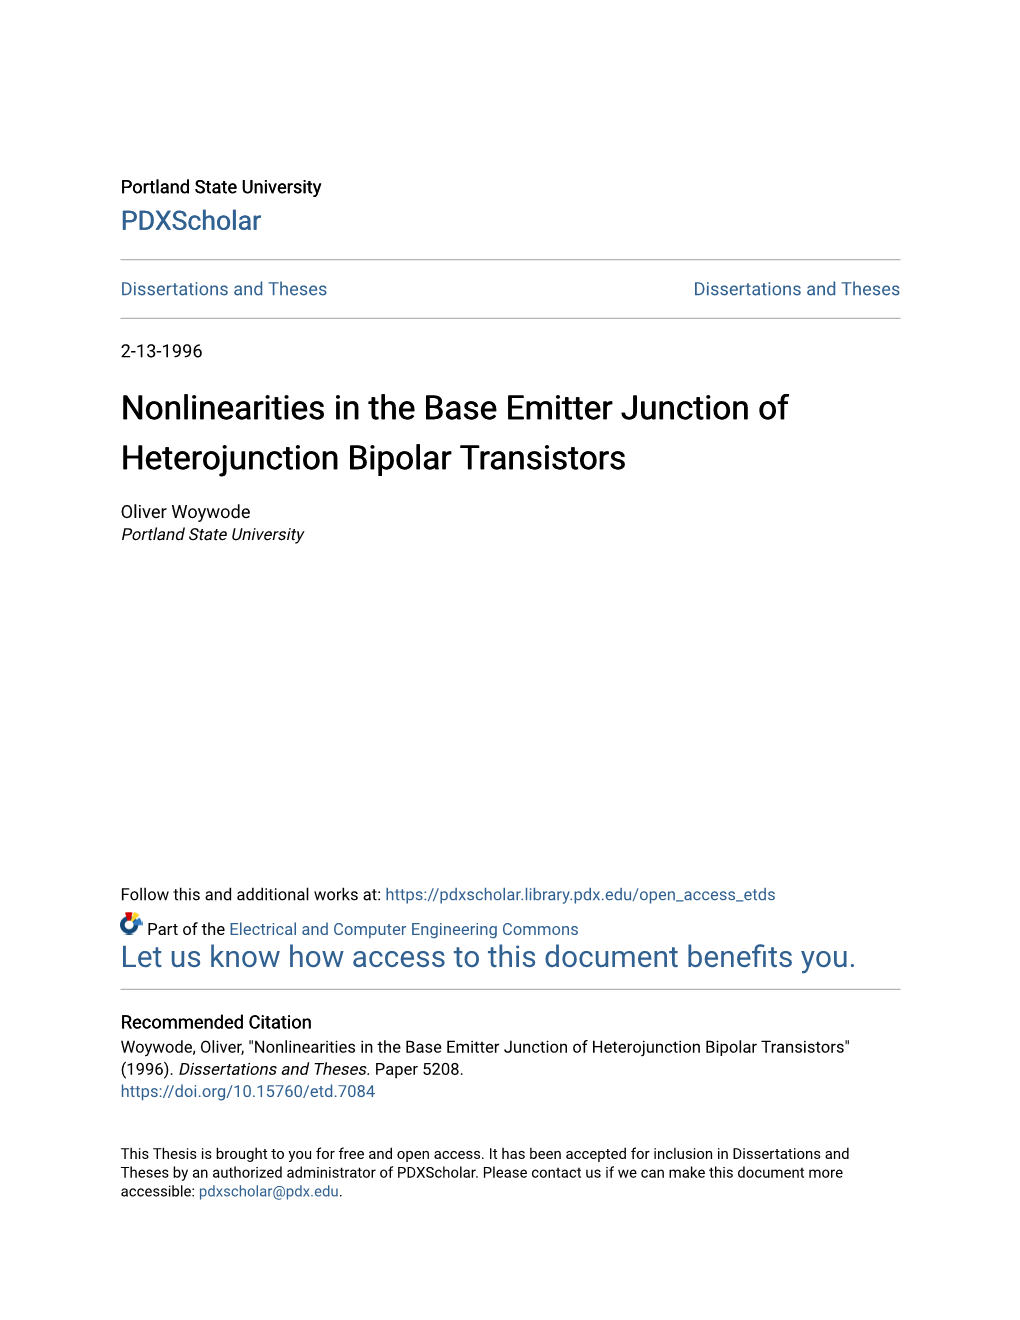 Nonlinearities in the Base Emitter Junction of Heterojunction Bipolar Transistors